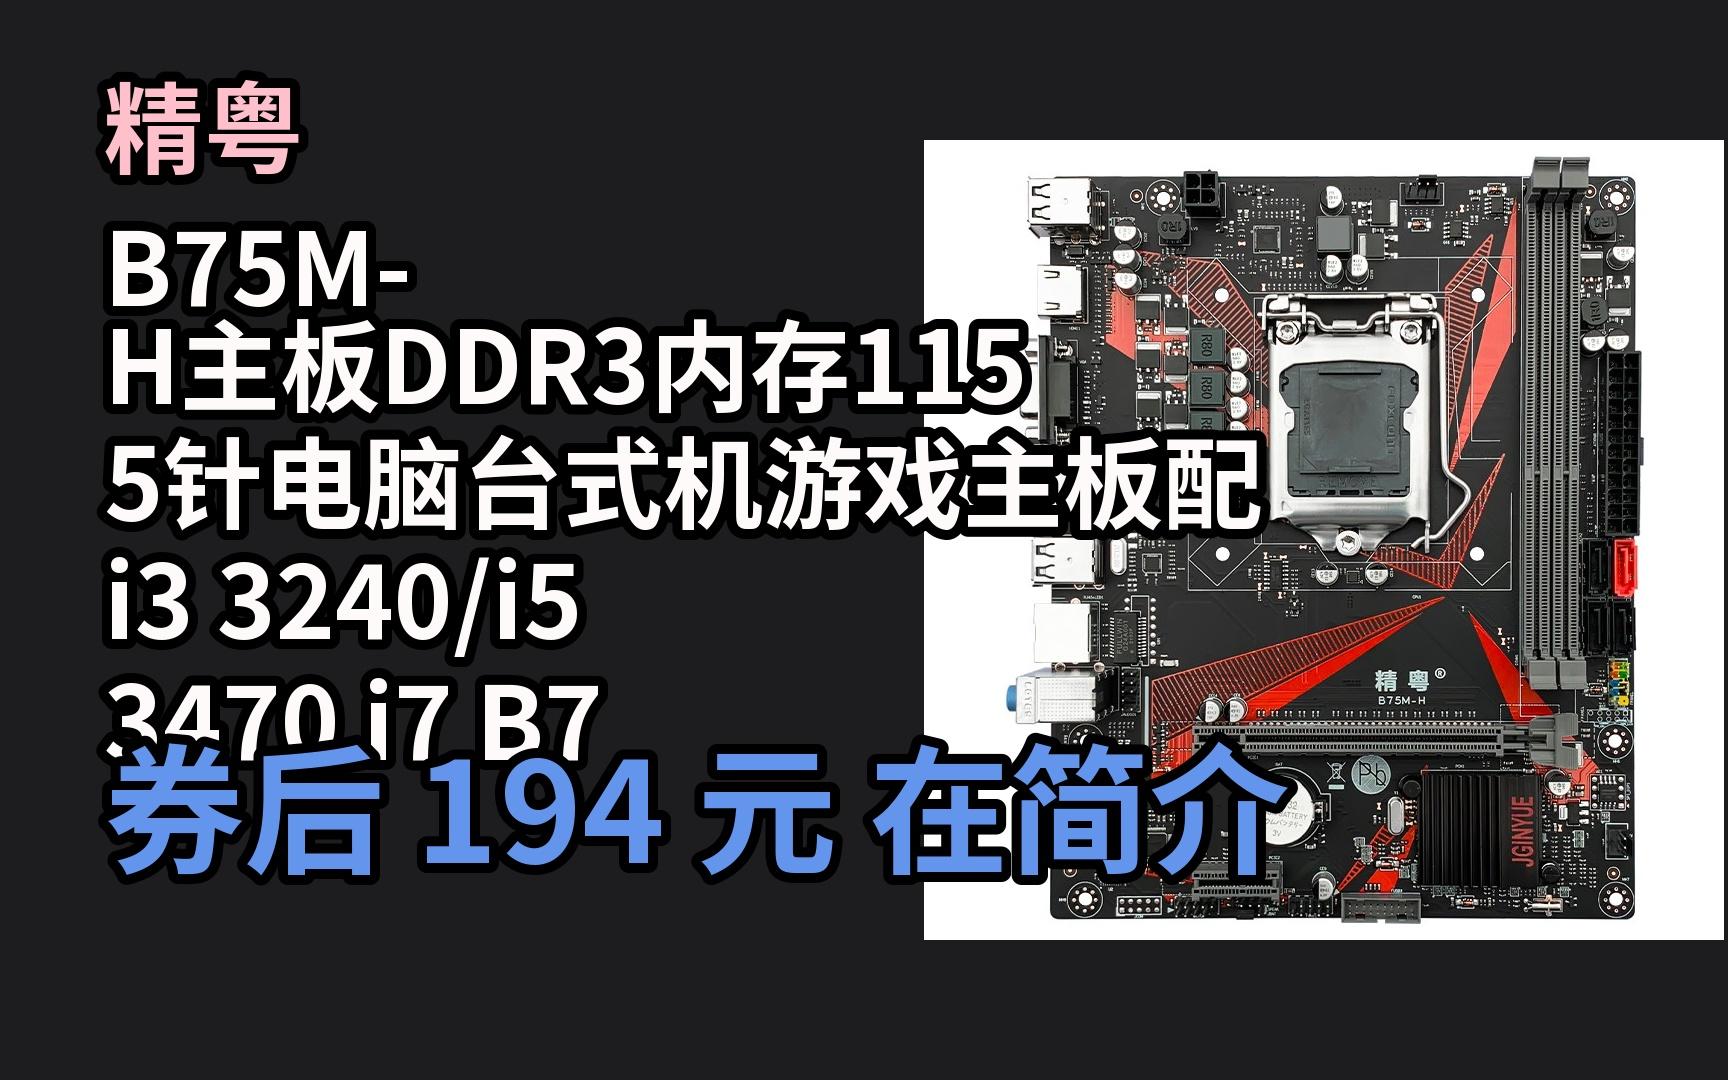 DDR3 主板虽老但稳定性强，是否真有必要更新换代？  第2张